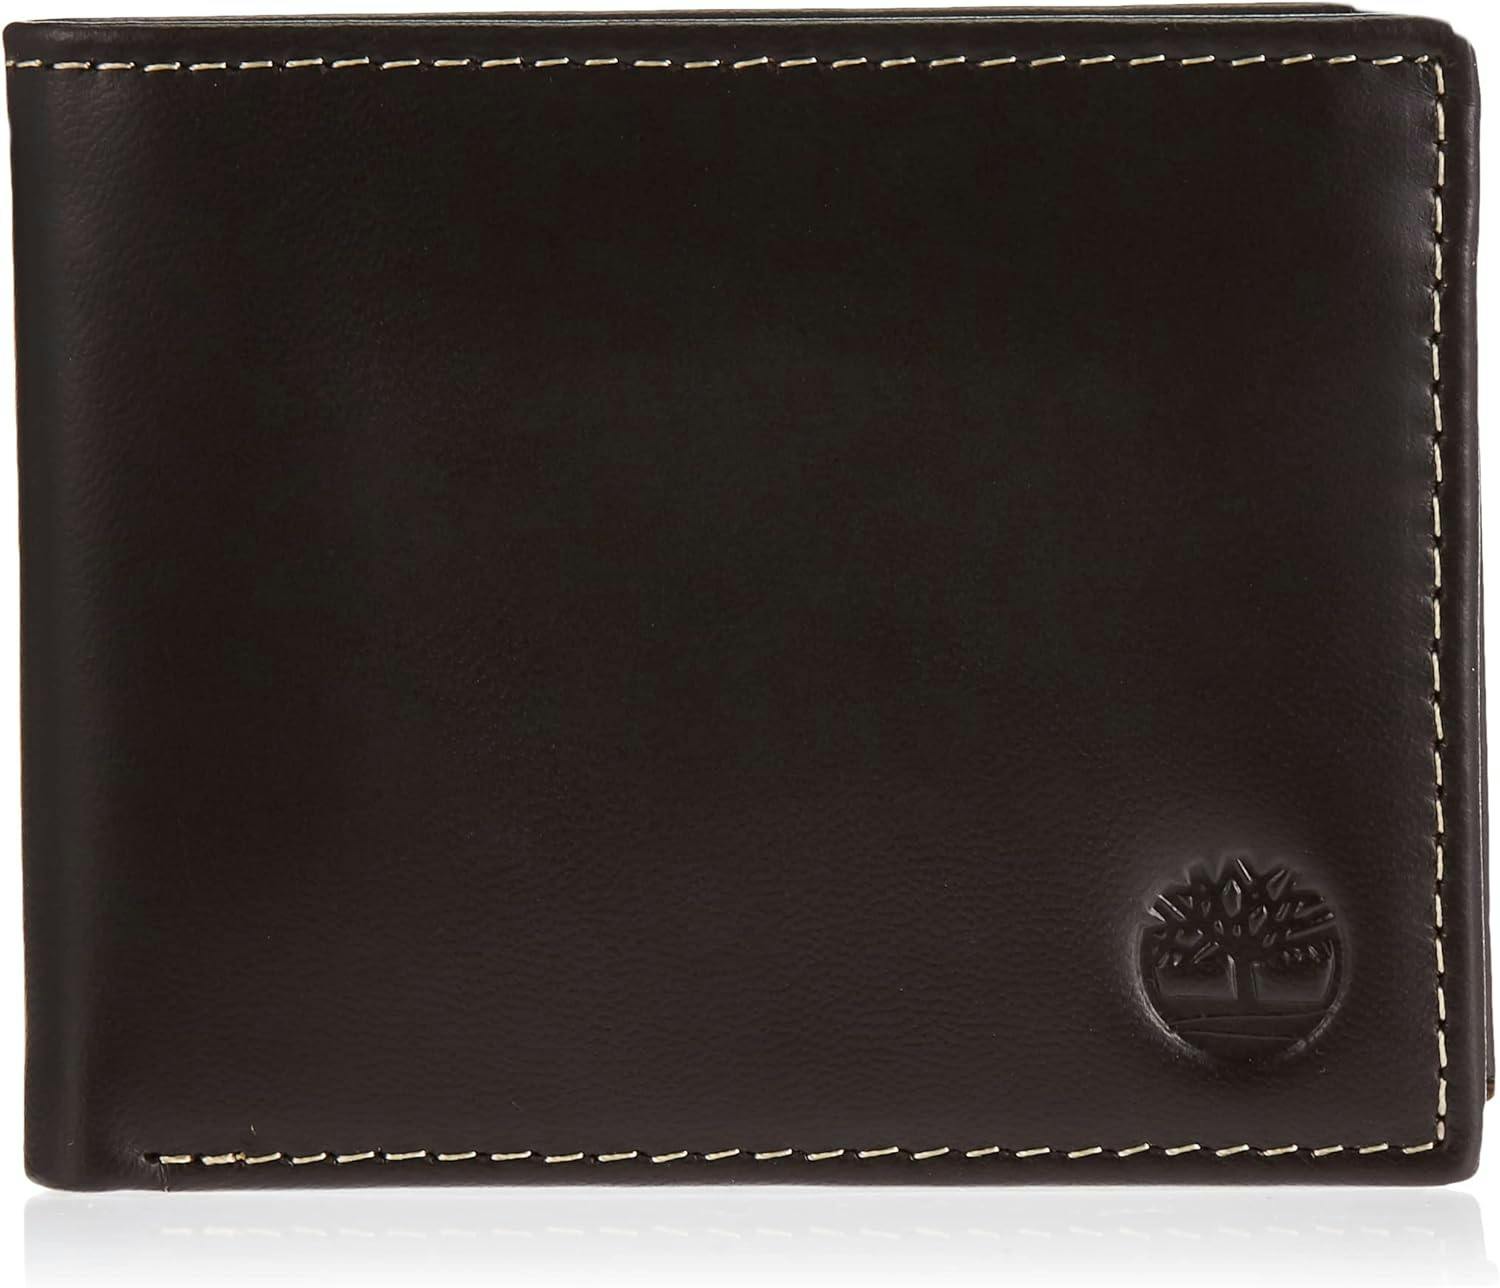 Rugged Brown Leather Slim Bifold Men's Wallet with Flip Pocket